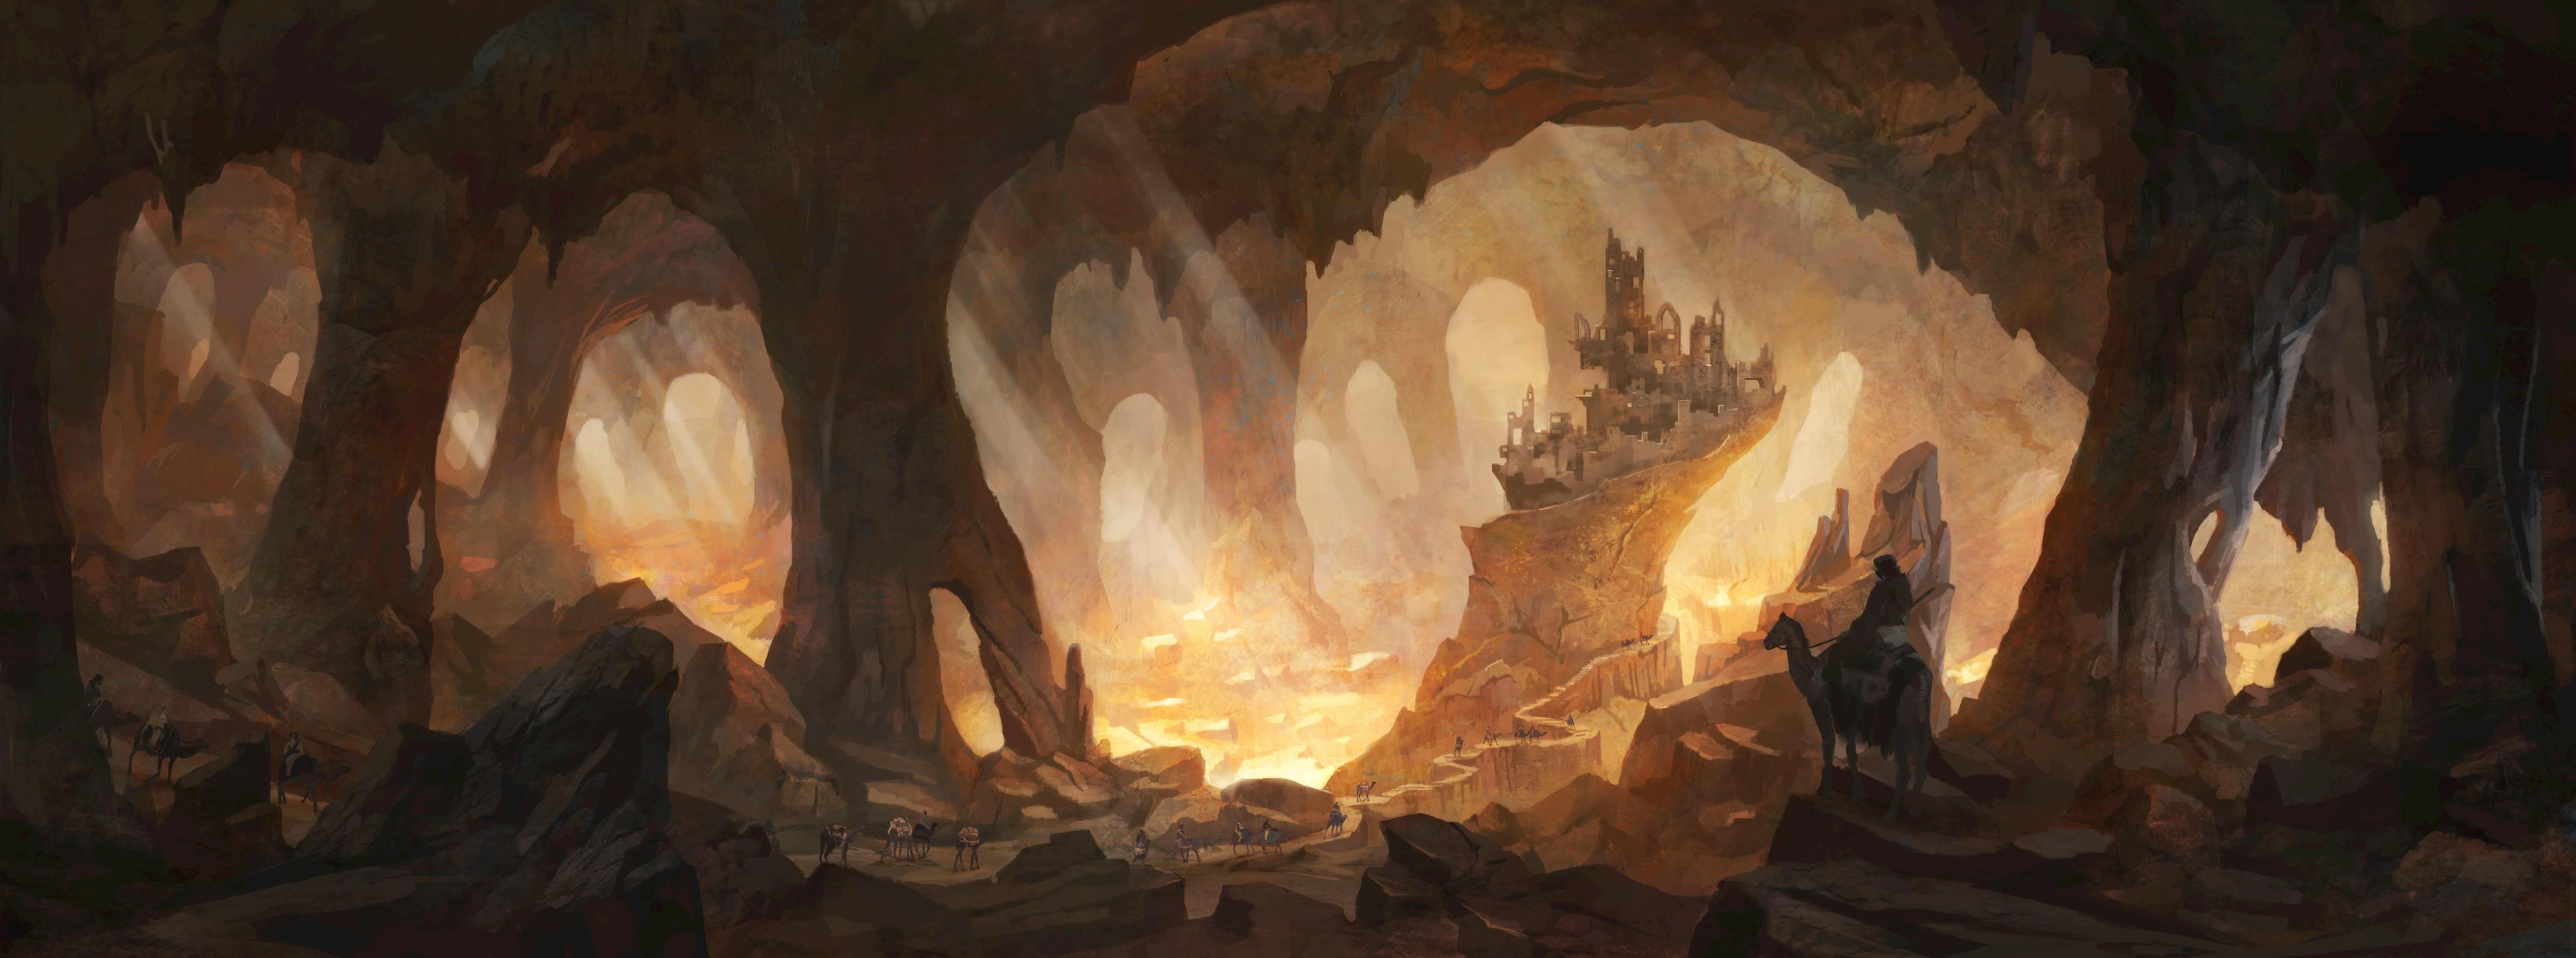 Baldur's Gate: Descent into Avernus